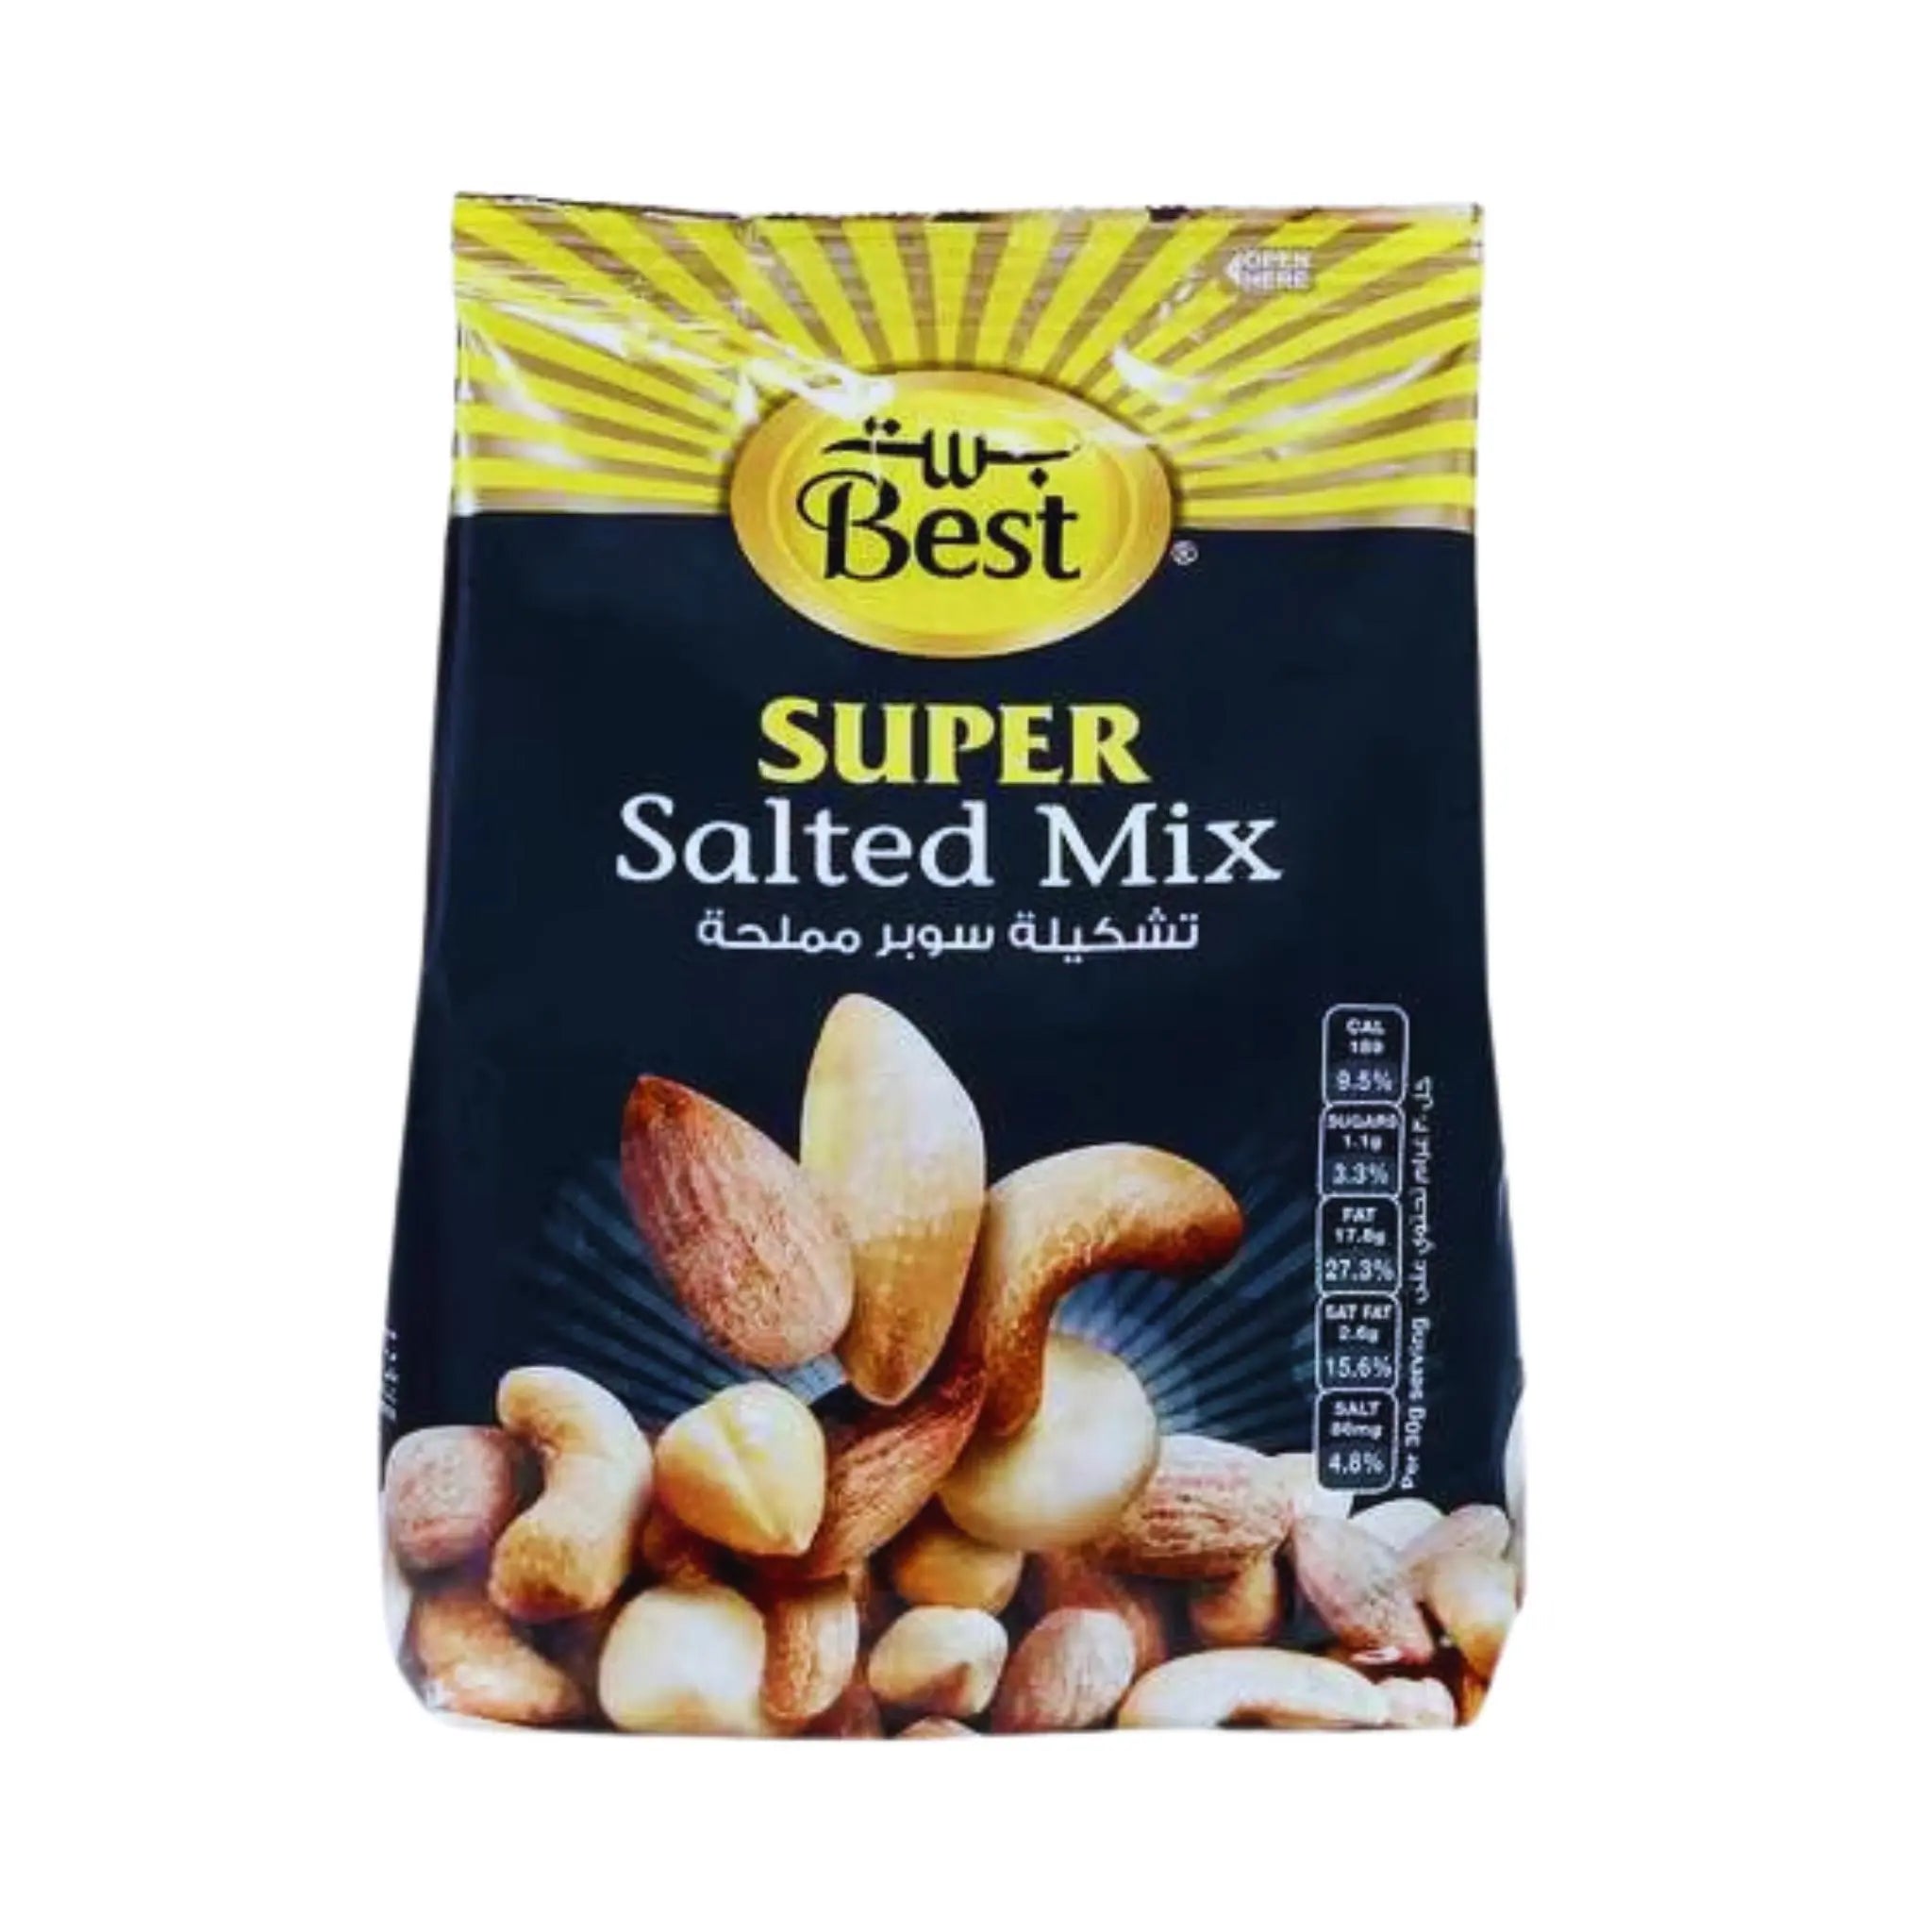 Best Super Salted Mix - 12x375g (1 carton) Marino.AE